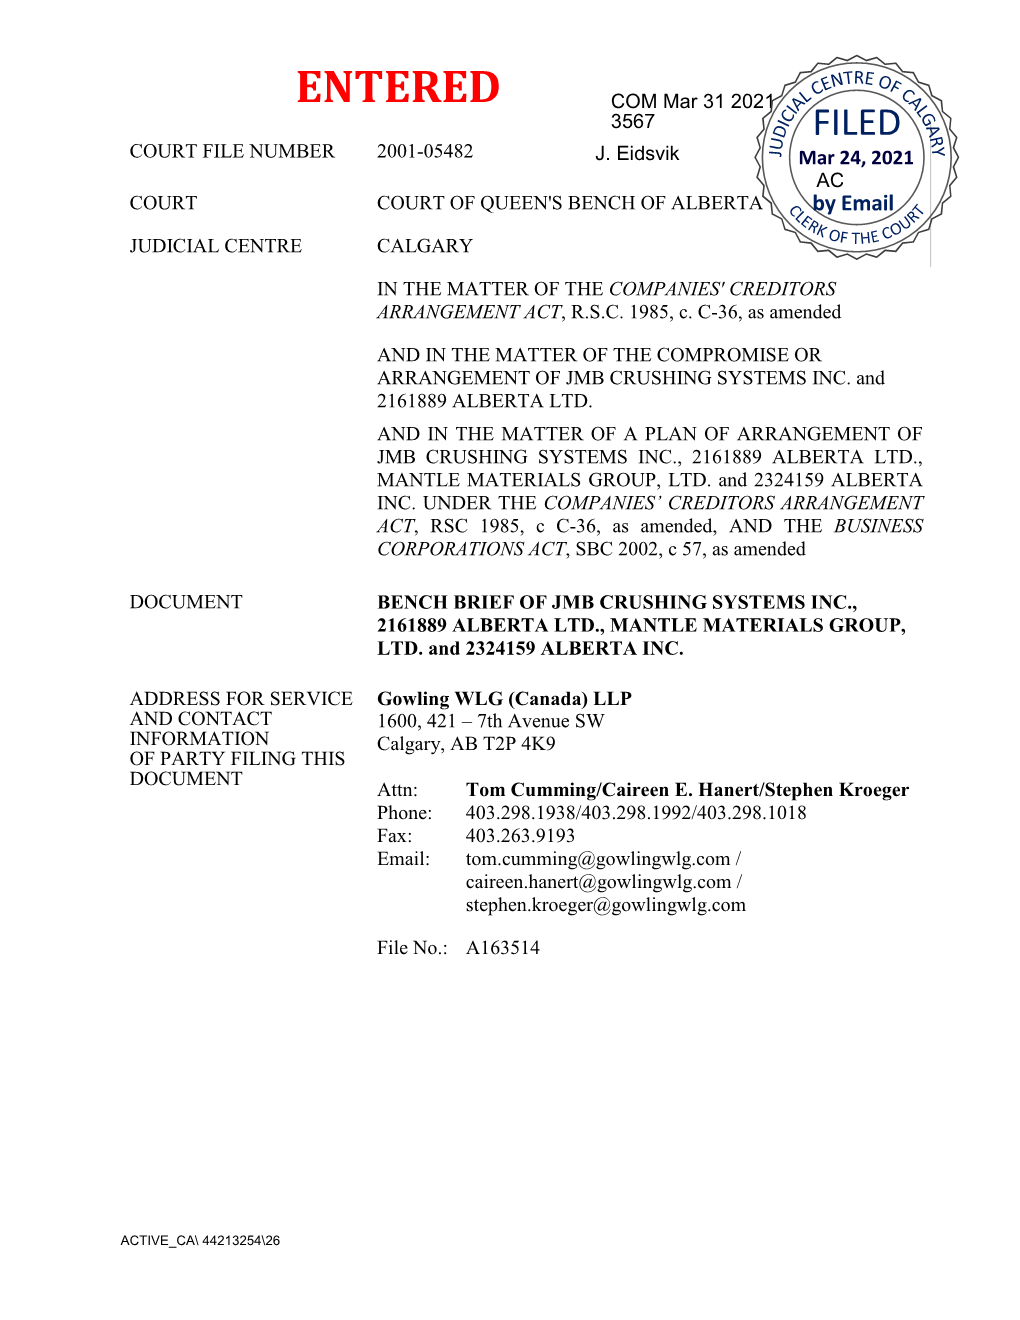 Bench Brief of Jmb Crushing Systems Inc., 2161889 Alberta Ltd., Mantle Materials Group, Ltd